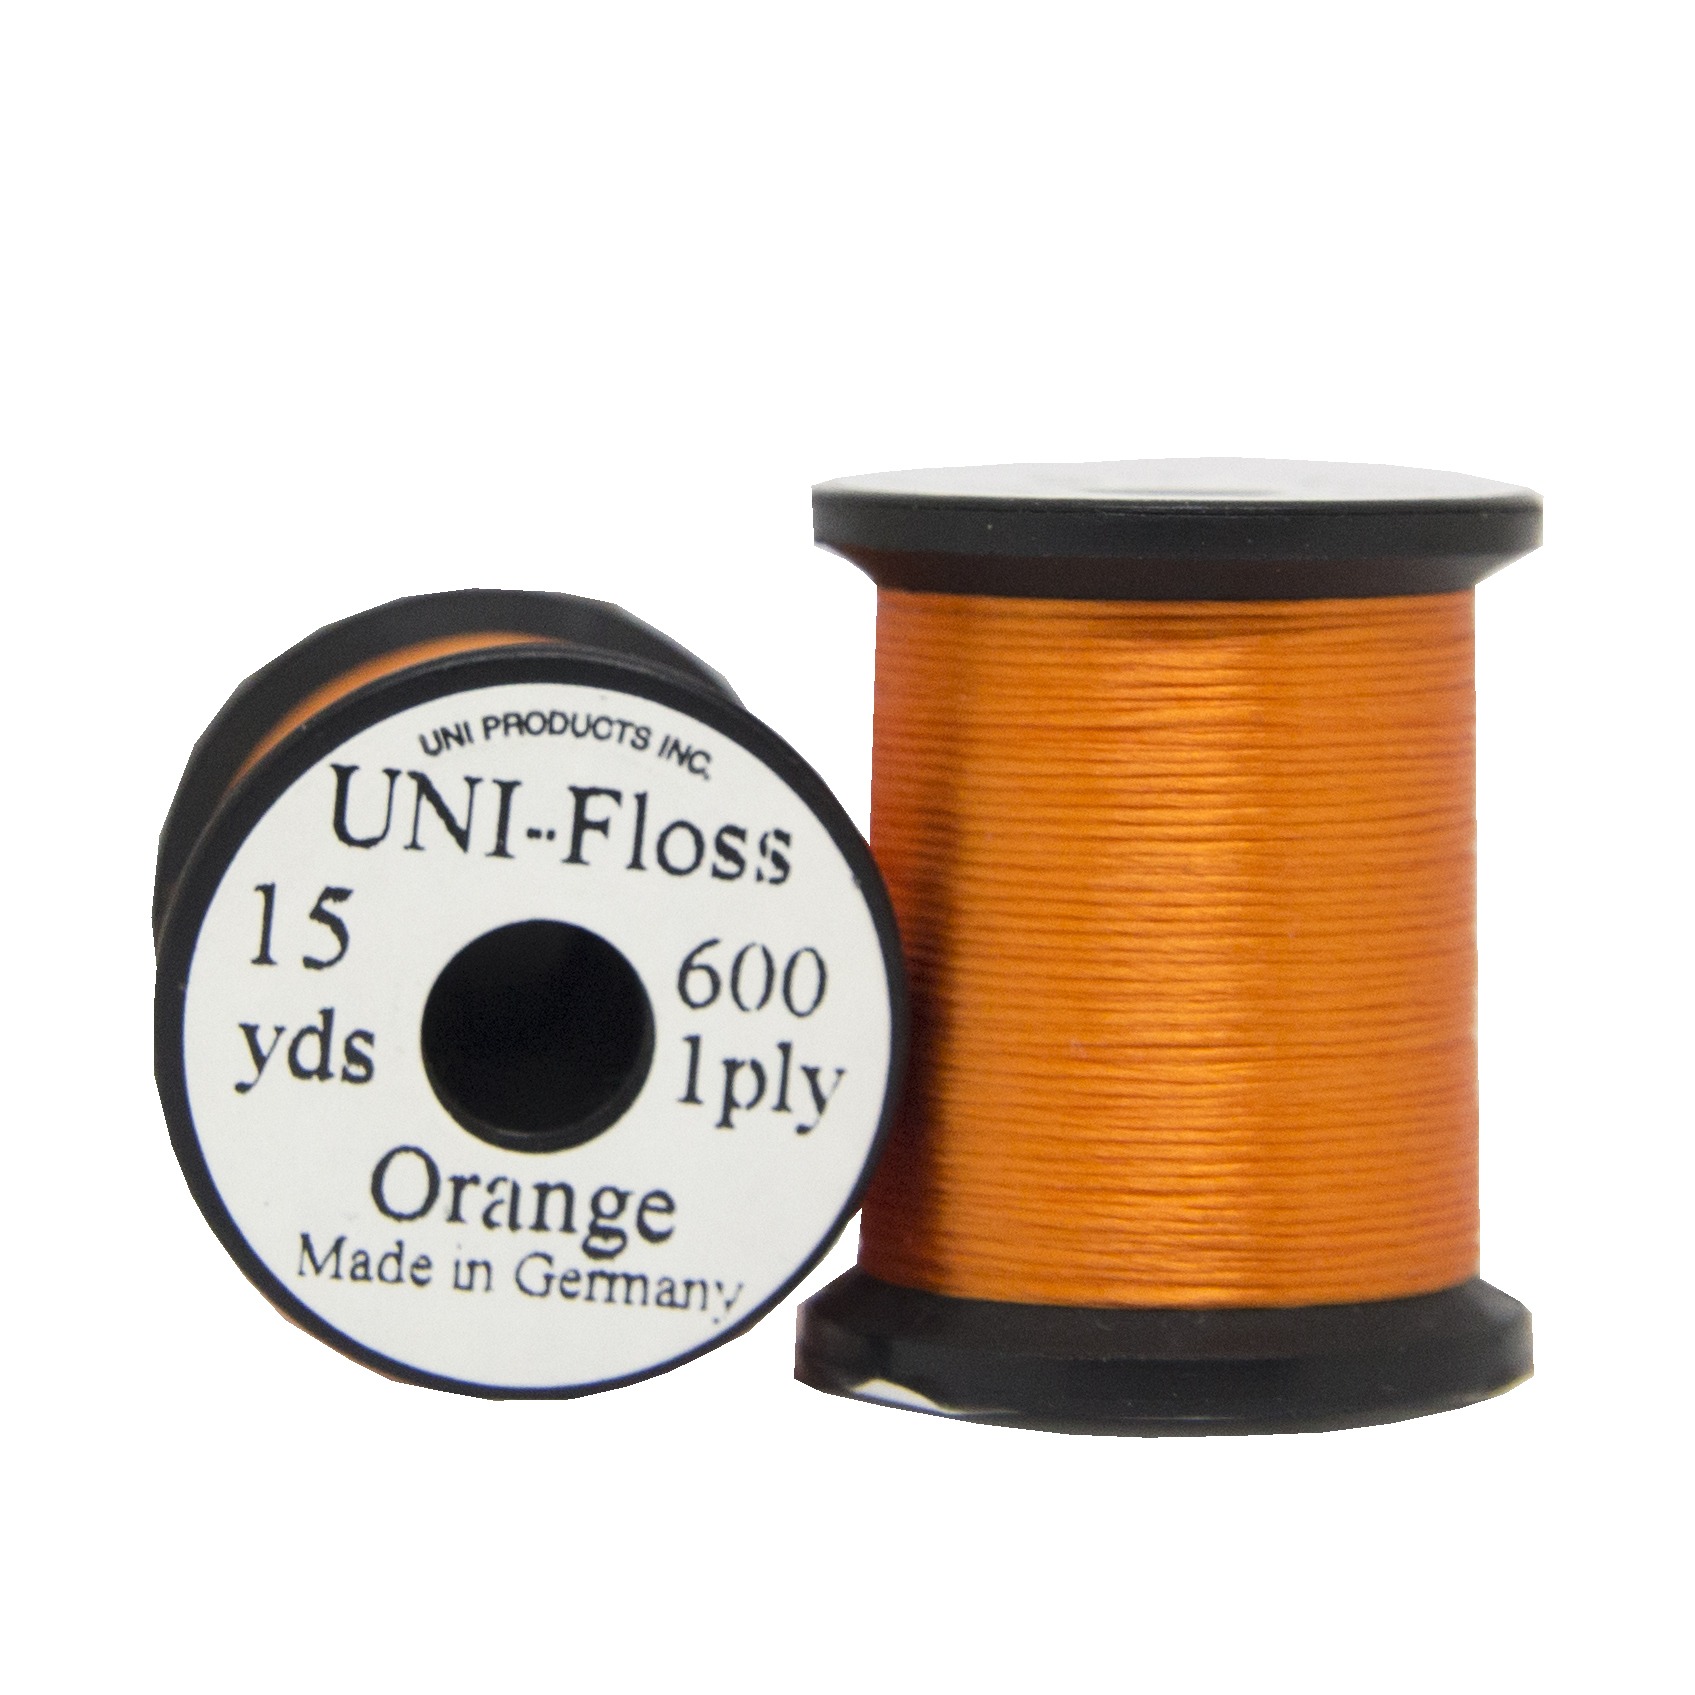 UNI Floss 15yds - Orange